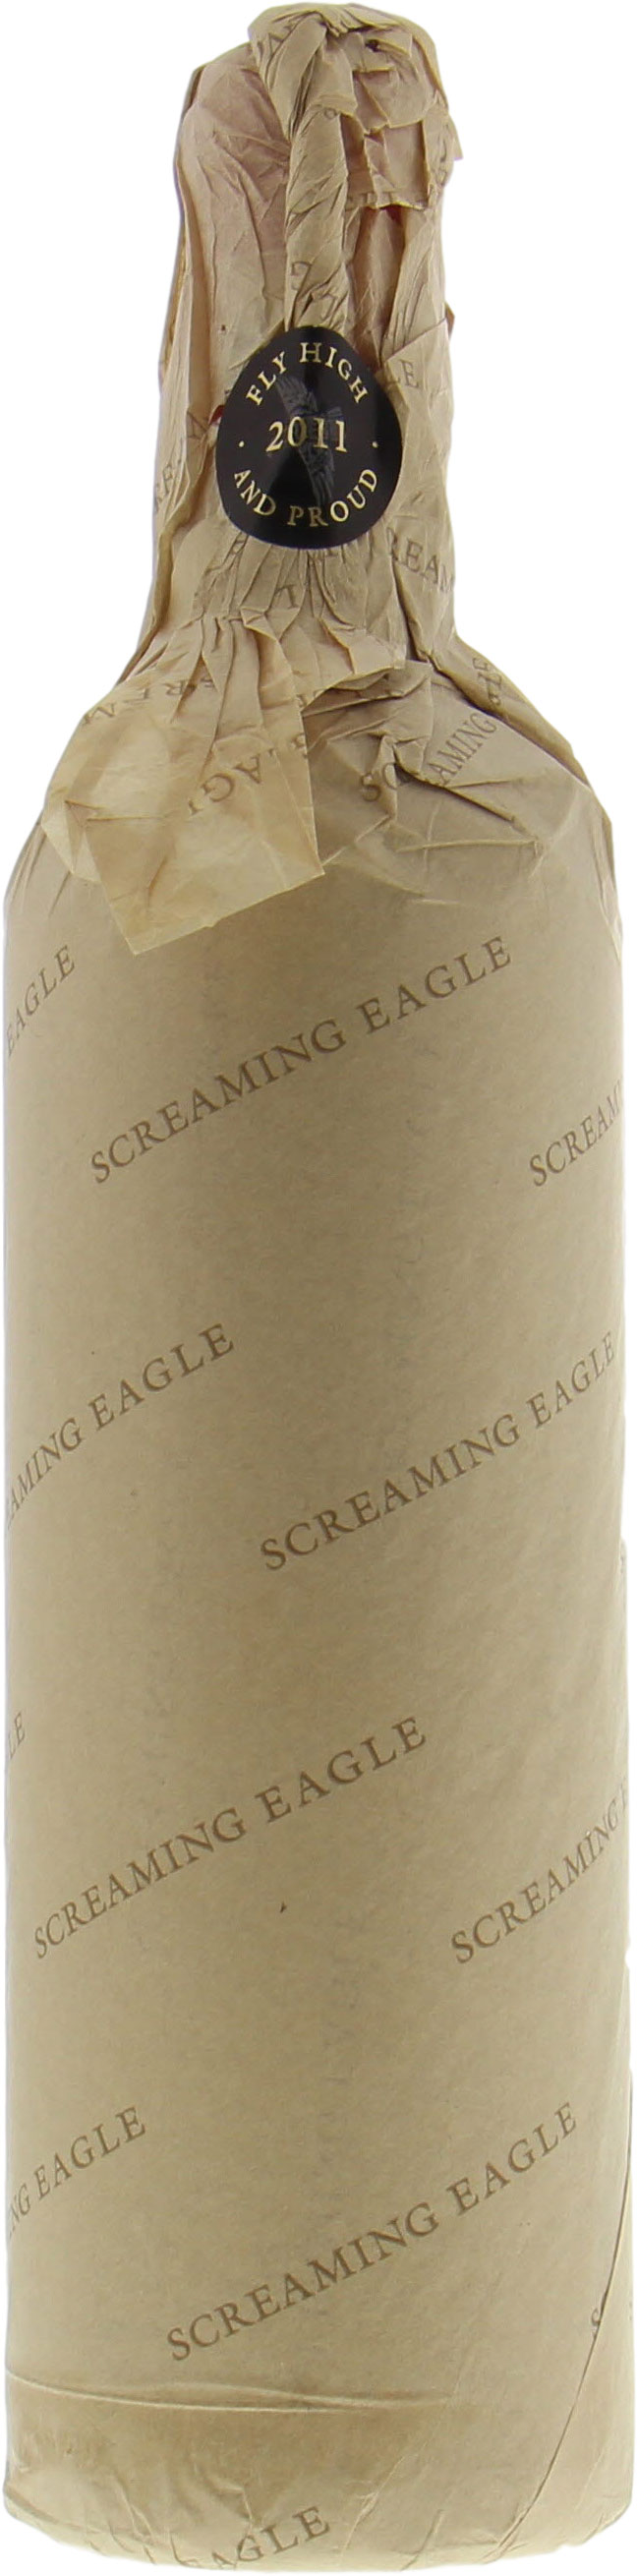 Screaming Eagle - Cabernet Sauvignon 2011